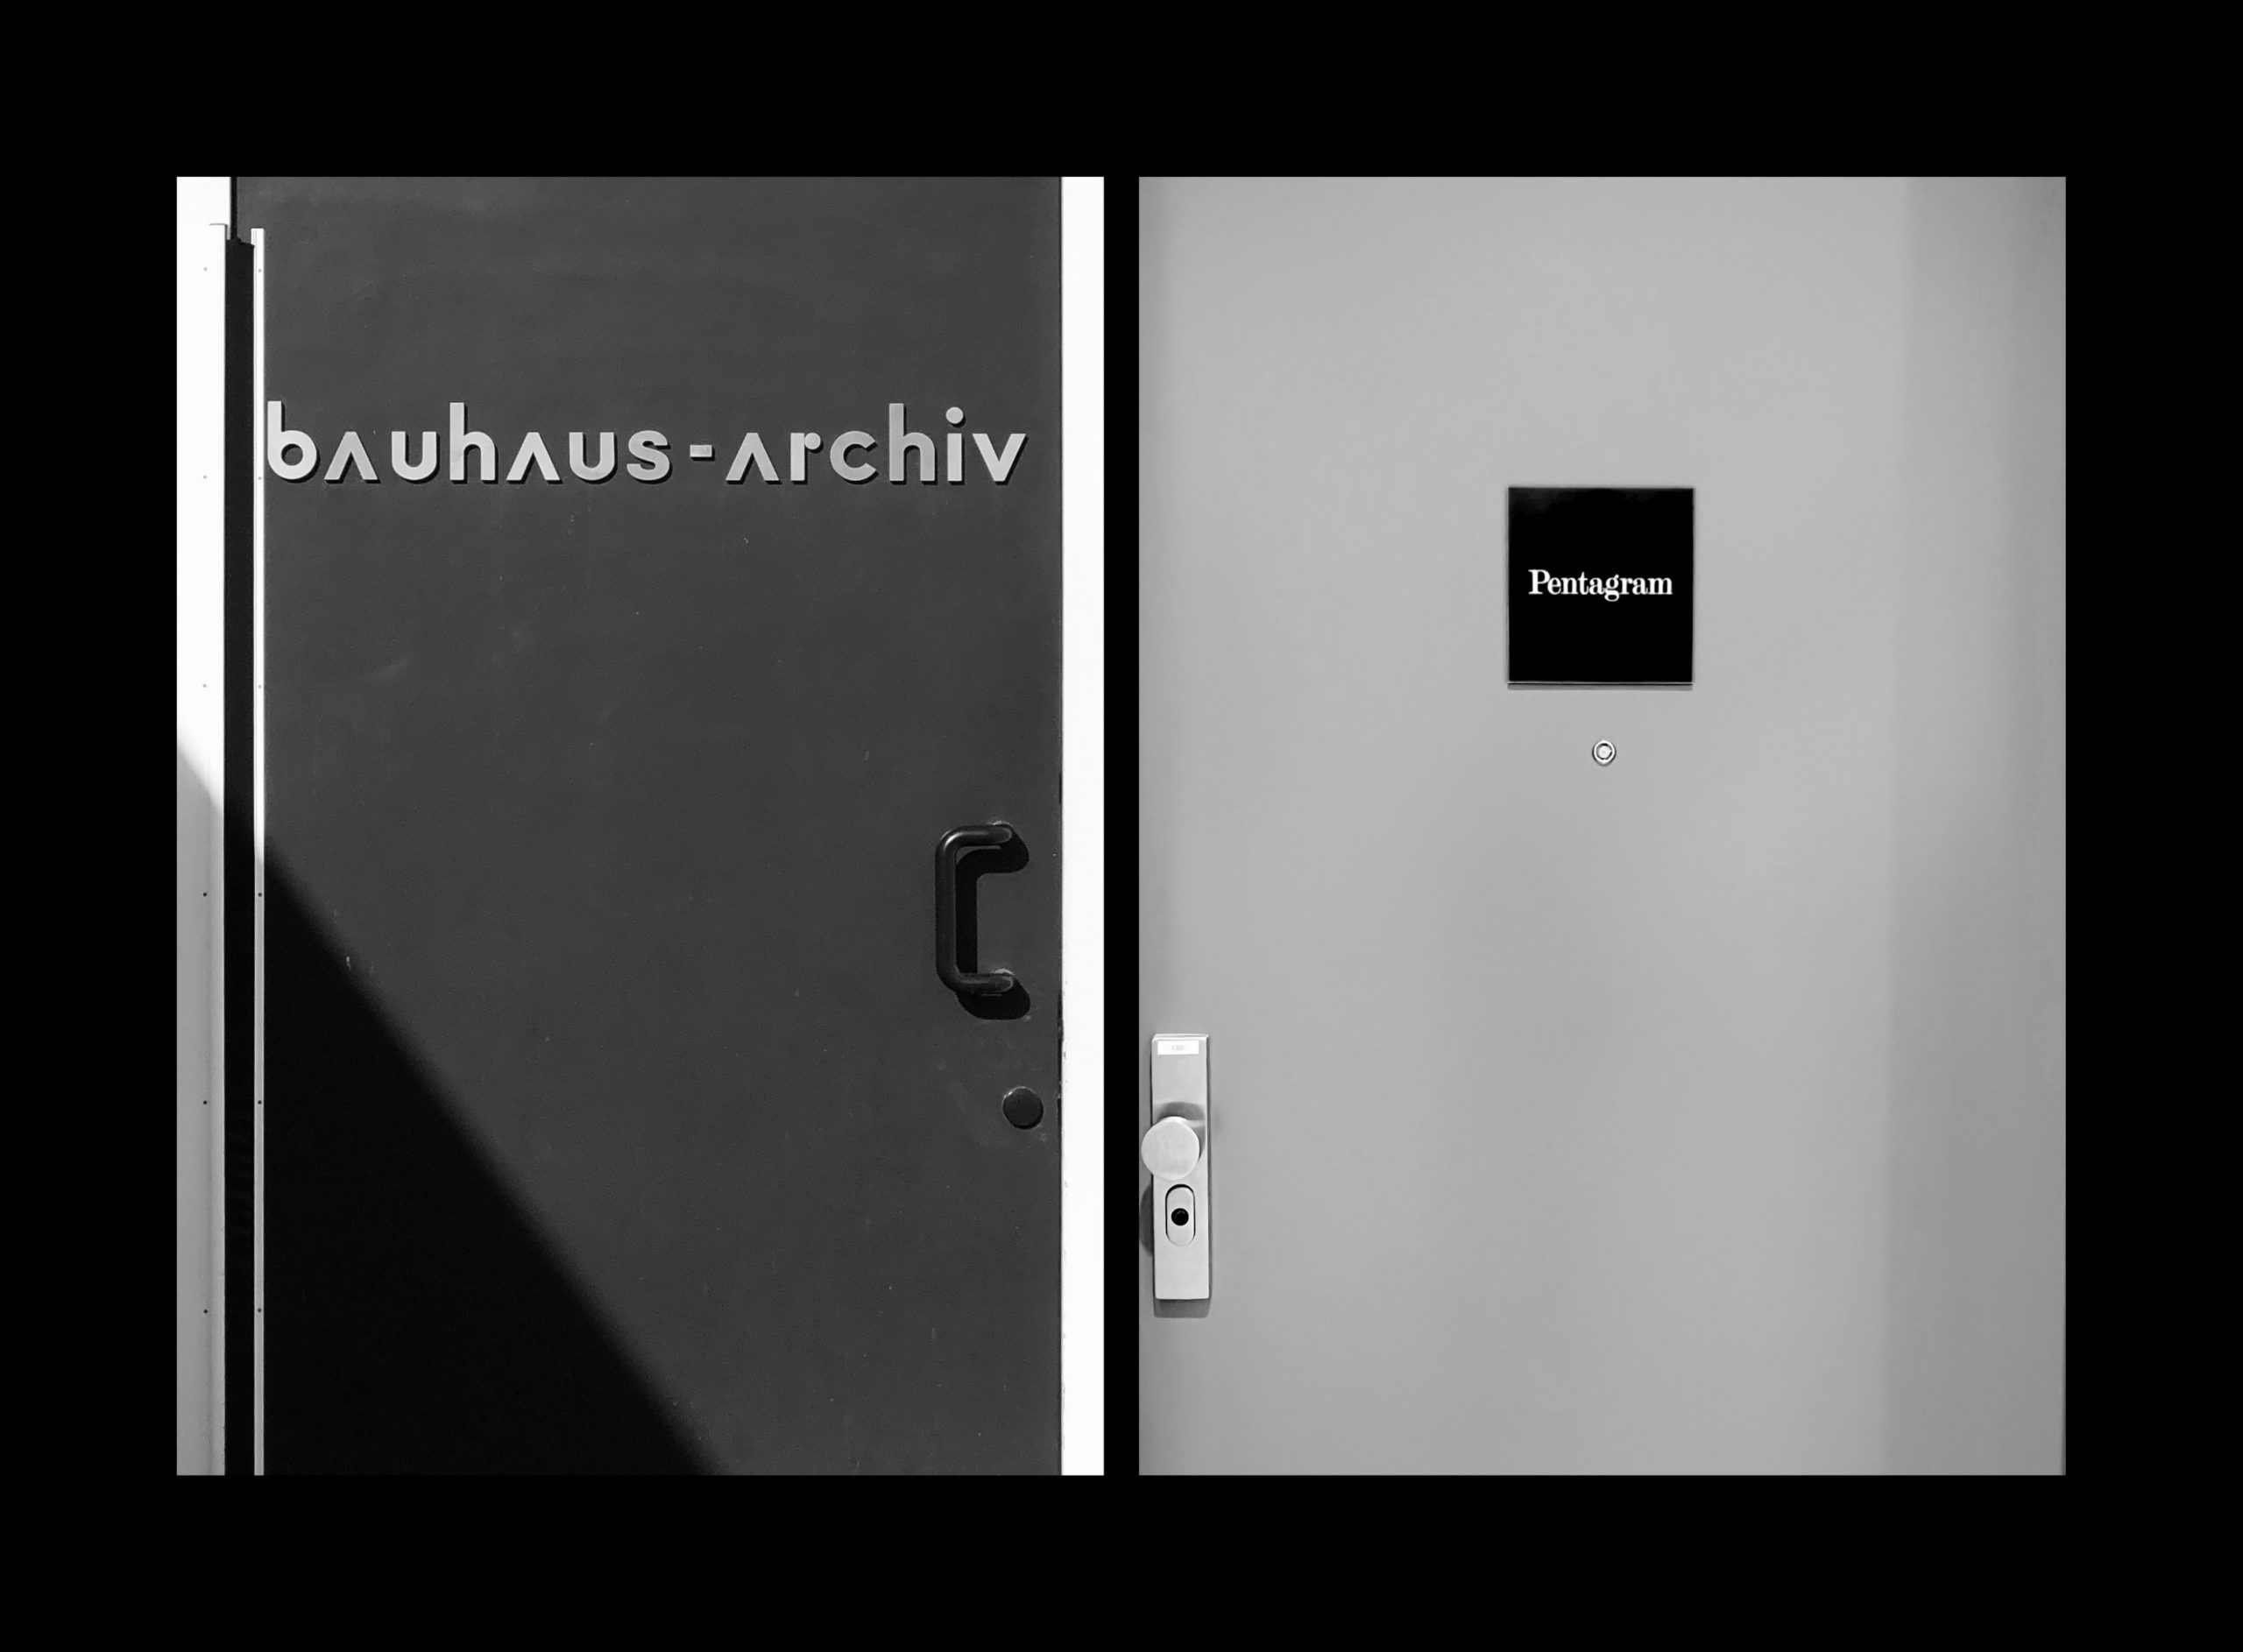 On the left: Bauhaus Archive (Bauhaus-Archiv Museum für Gestaltung Berlin), 2018. On the right: Pentagram Design Office (Berlin), 2022.